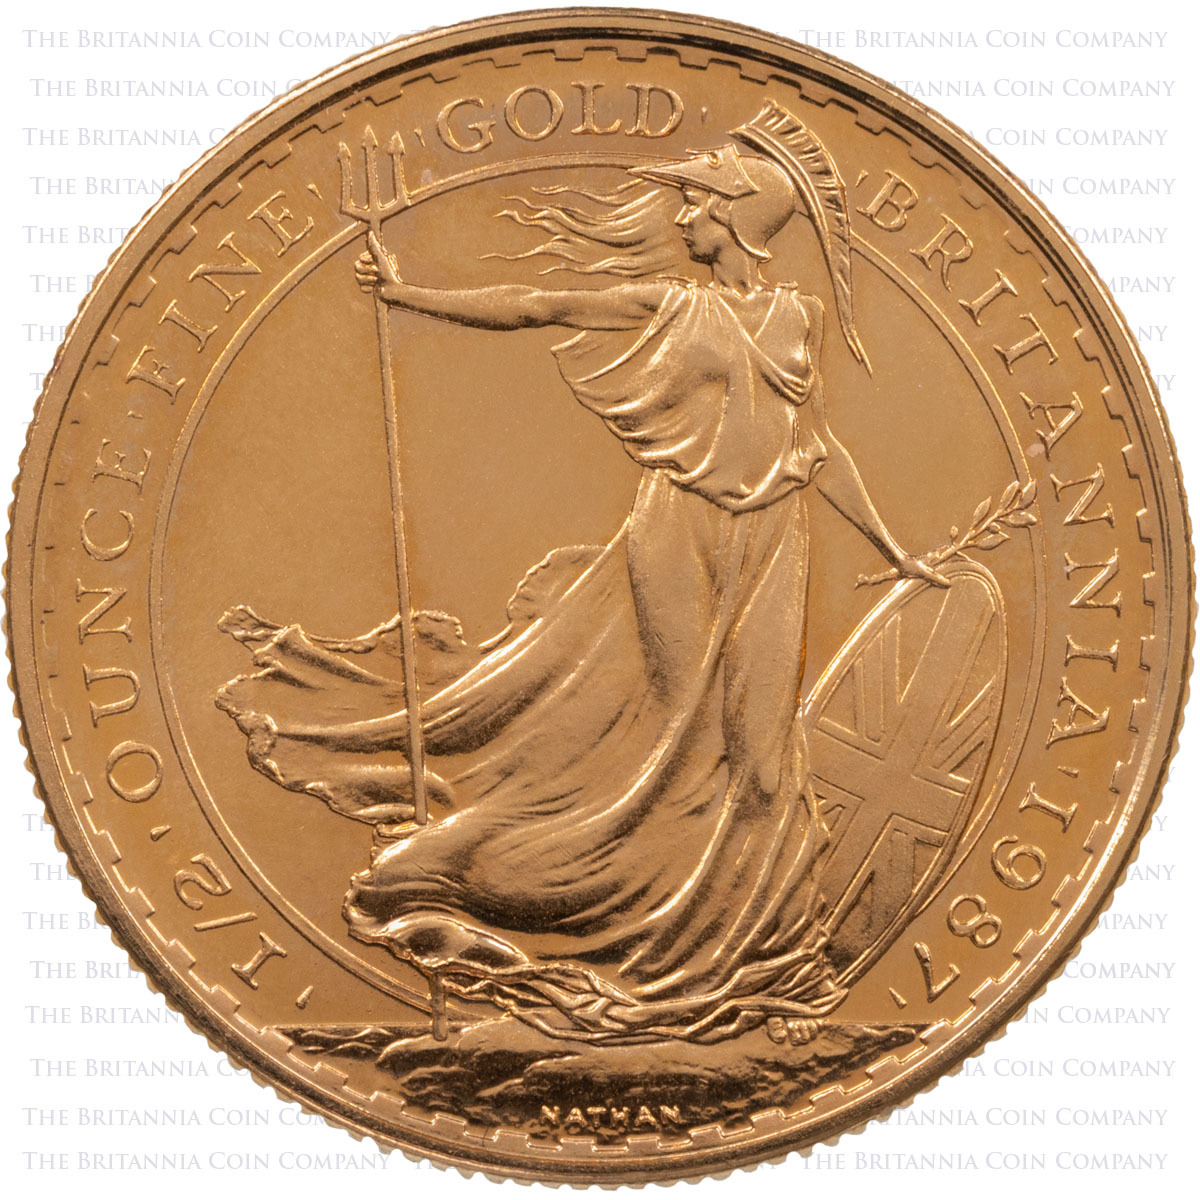 Half Ounce 22 Carat Gold Mixed-Date Britannia Bullion Coins (Best Value) Reverse